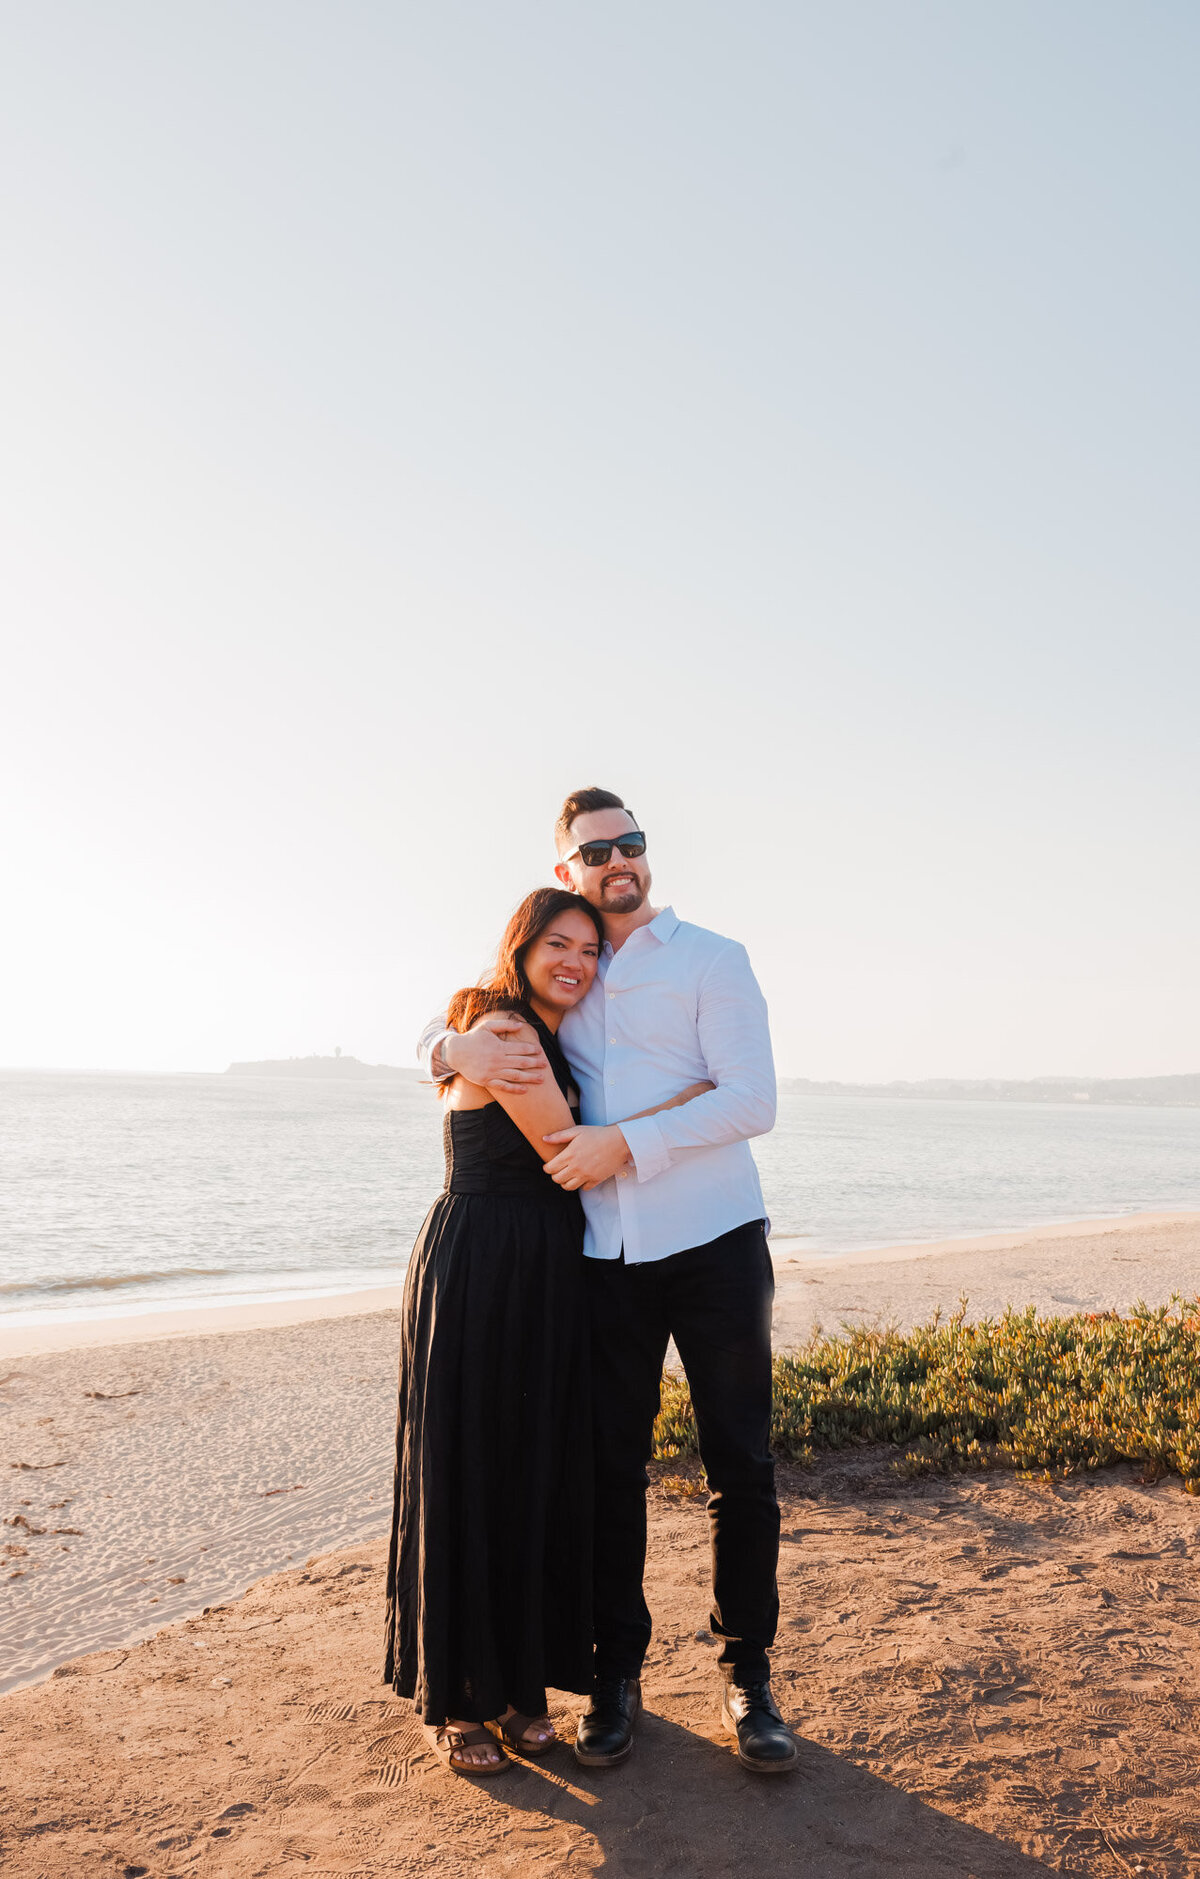 Kyle Woolum + Stephanie-Proposal Engagement-Half Moon Bay-Dunes Beach-San Francisco Wedding Photographer-San Francisco Photographer-Half Moon Bay Photographer-Emily Pillon Photography-S-092323-18